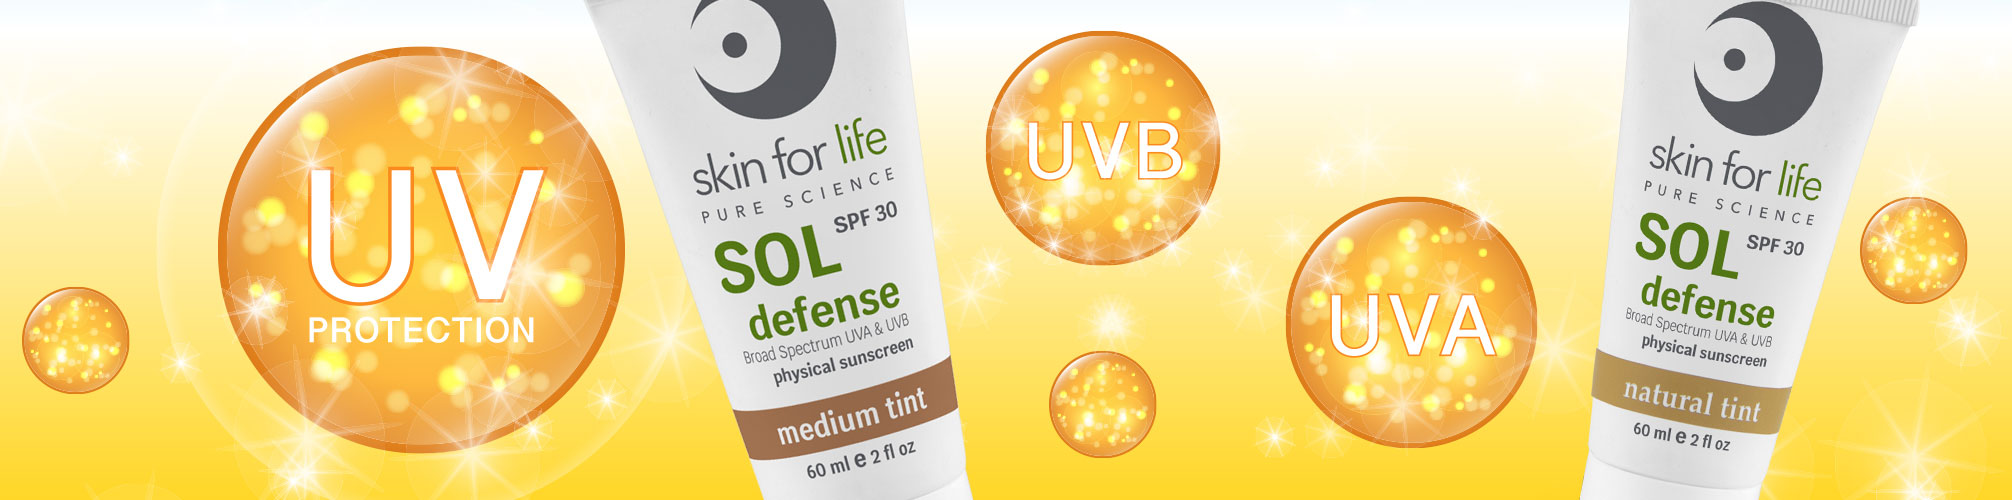 SOL Defense SPF30 physical sunscreen